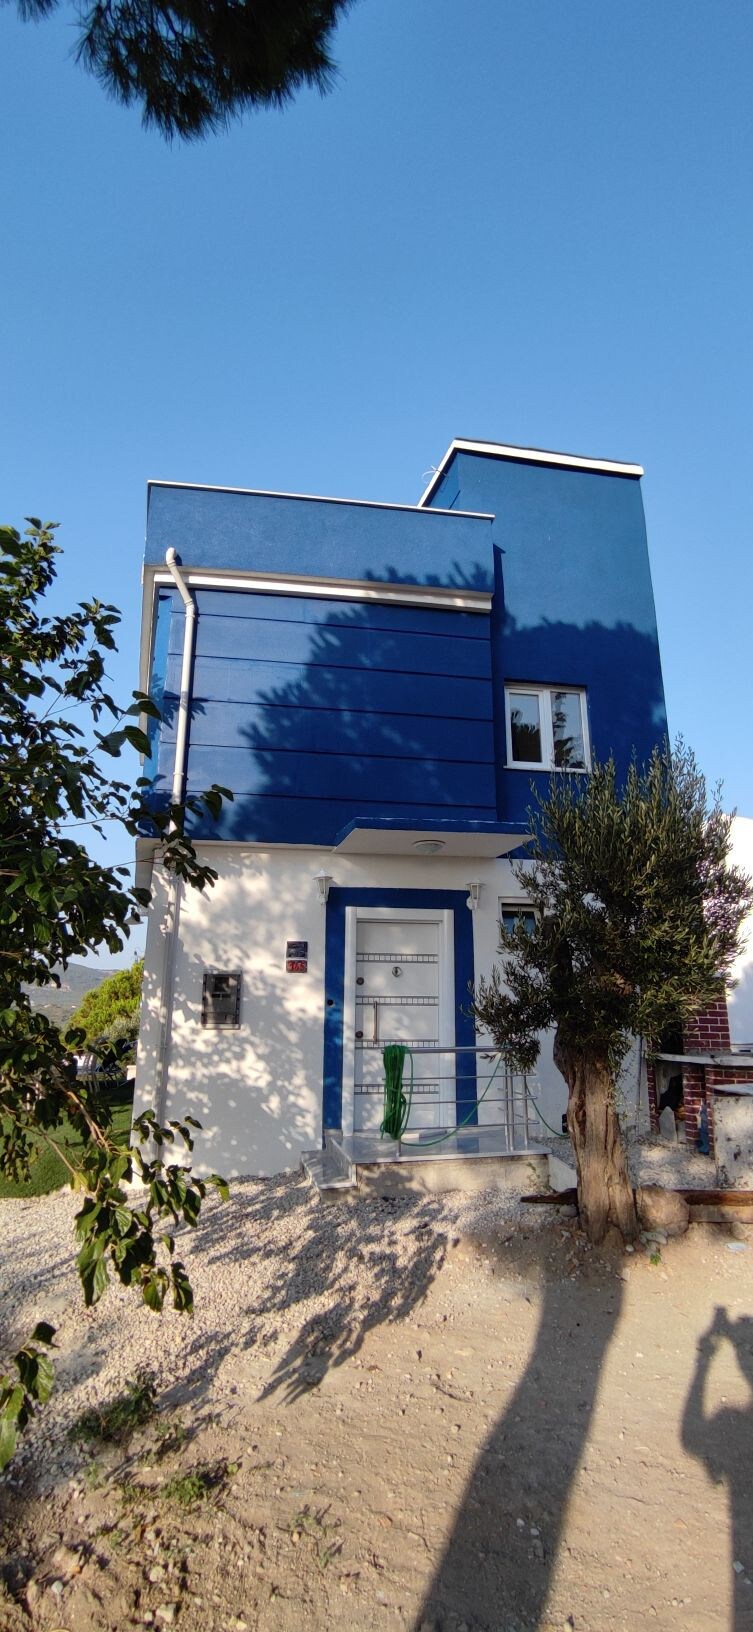 Blue House